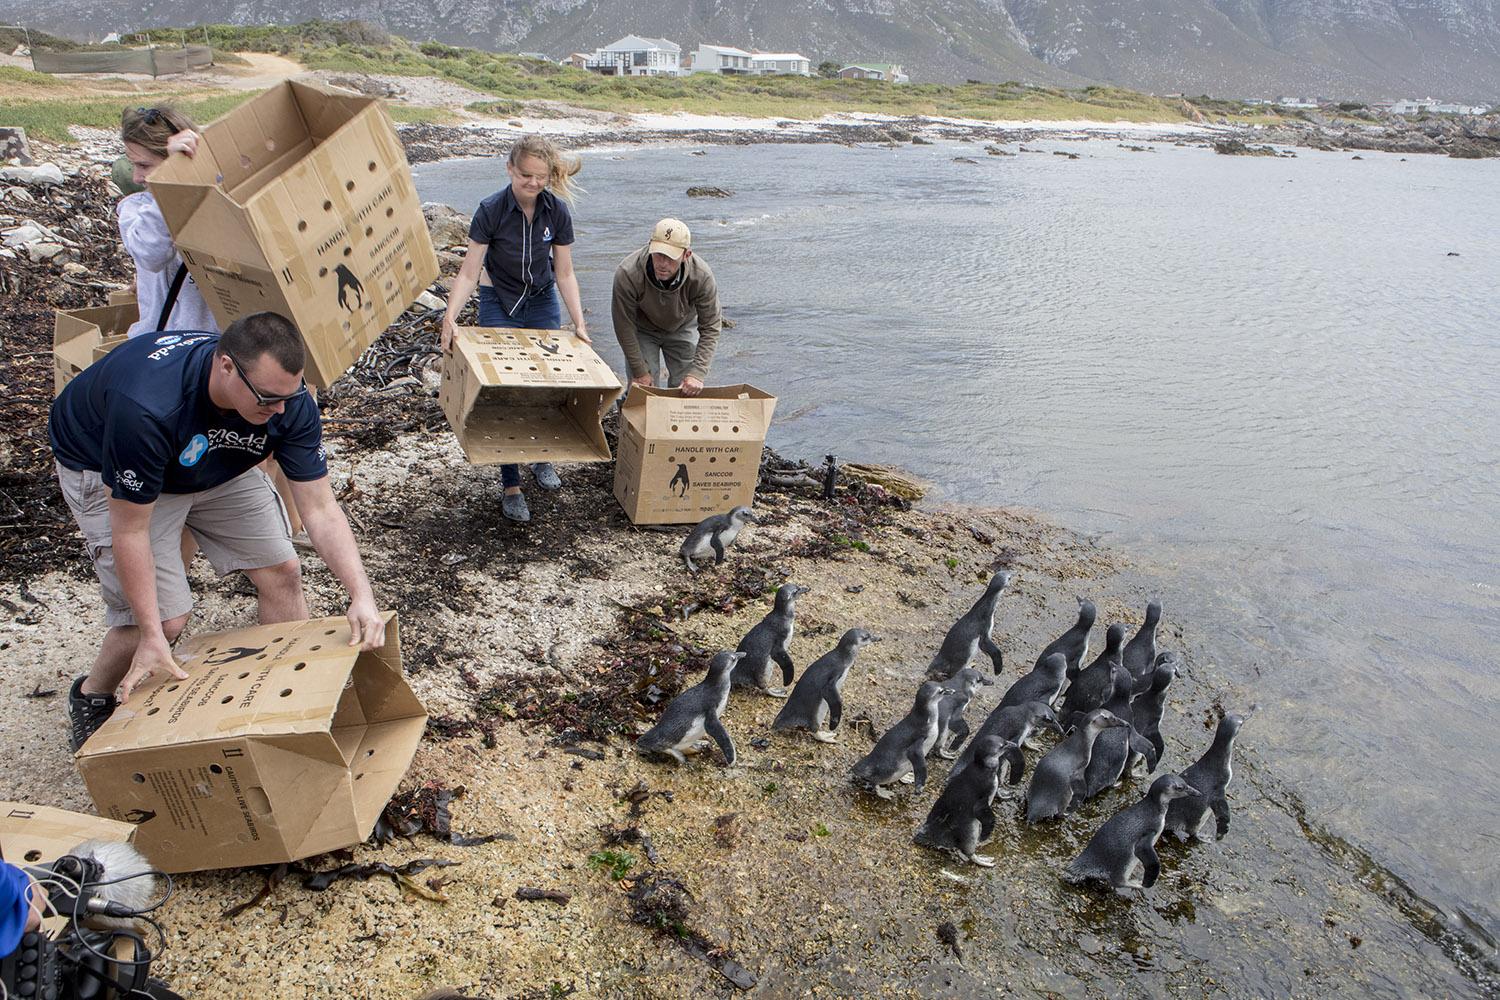 Kurt Heizmann of Shedd Aquarium’s Animal Response Team releases penguin chicks back into the wild in South Africa. (Courtesy of Shedd Aquarium)